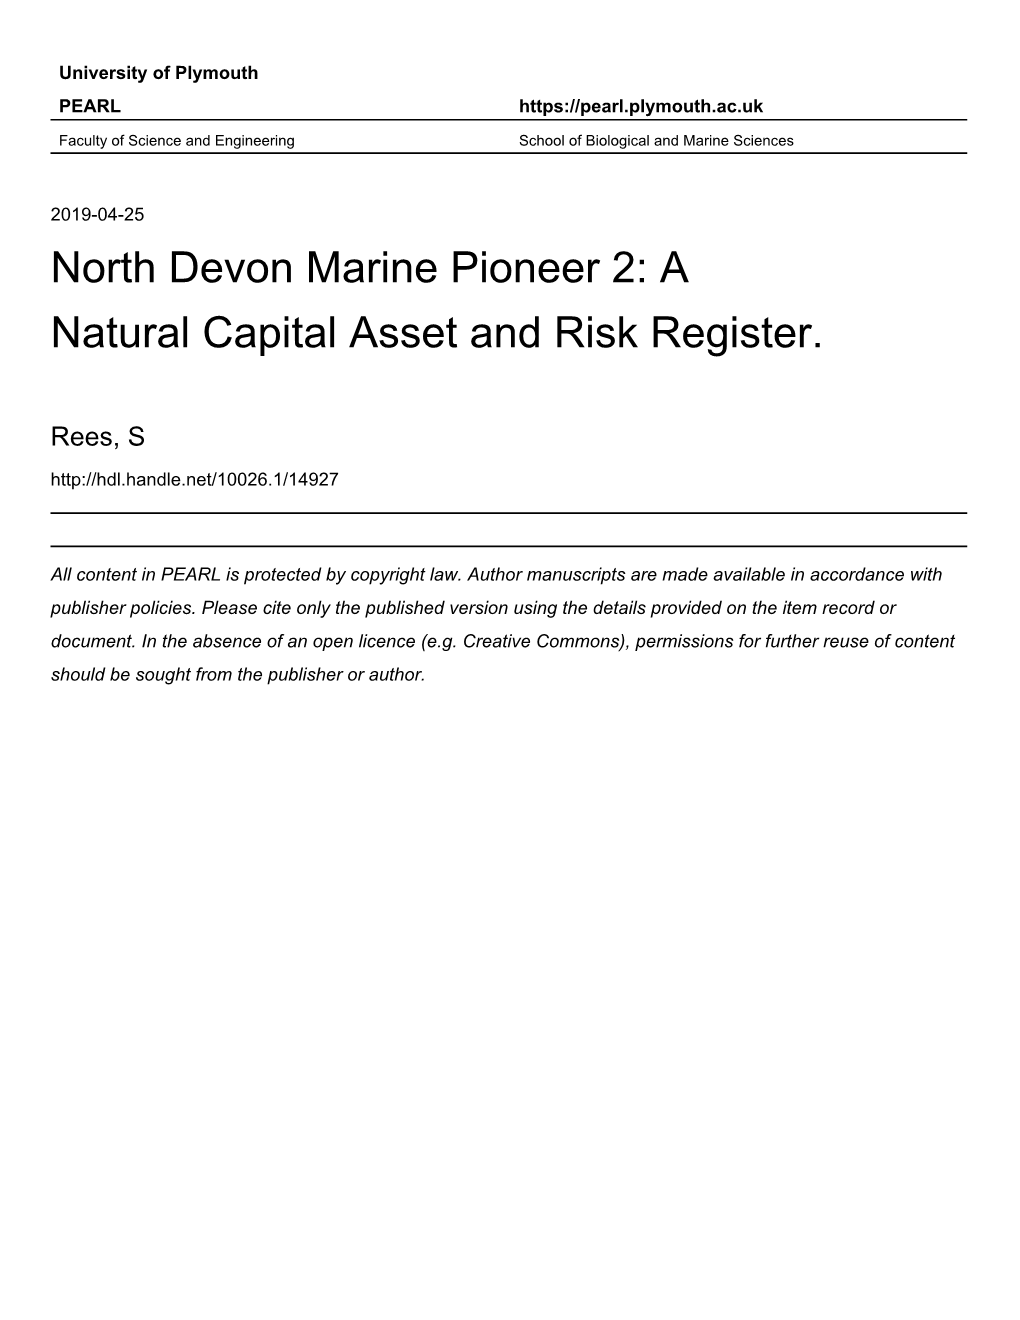 North Devon Marine Pioneer 2: a Natural Capital Asset and Risk Register